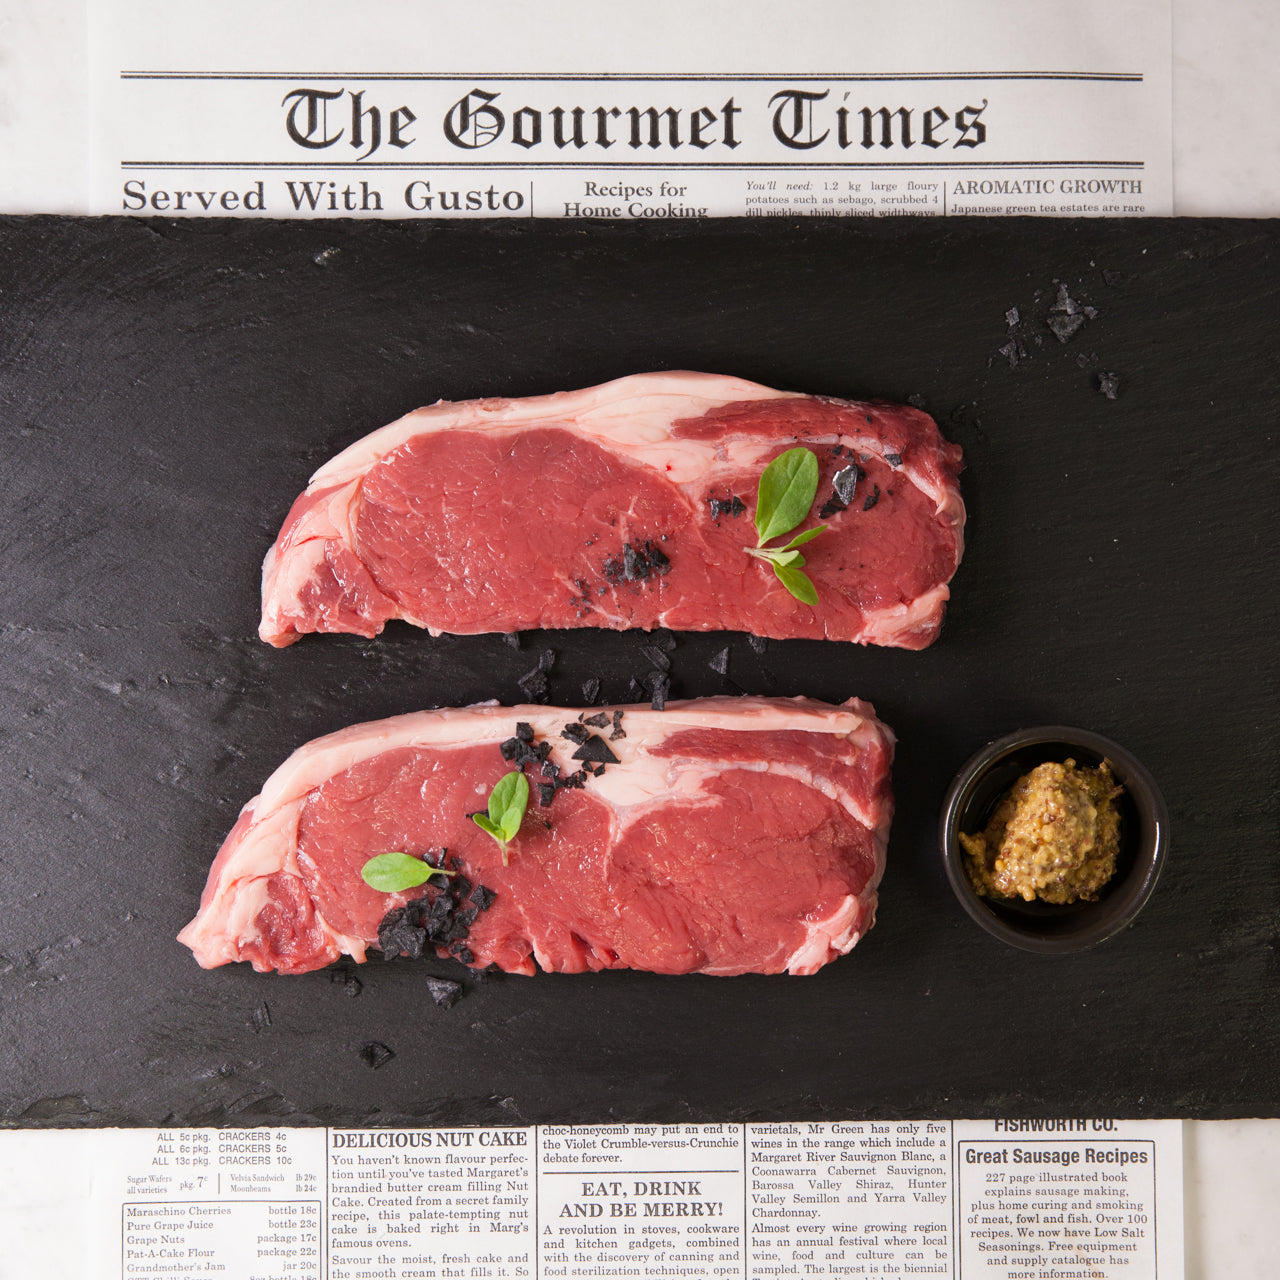 Beef Porterhouse/Sirloin Steak